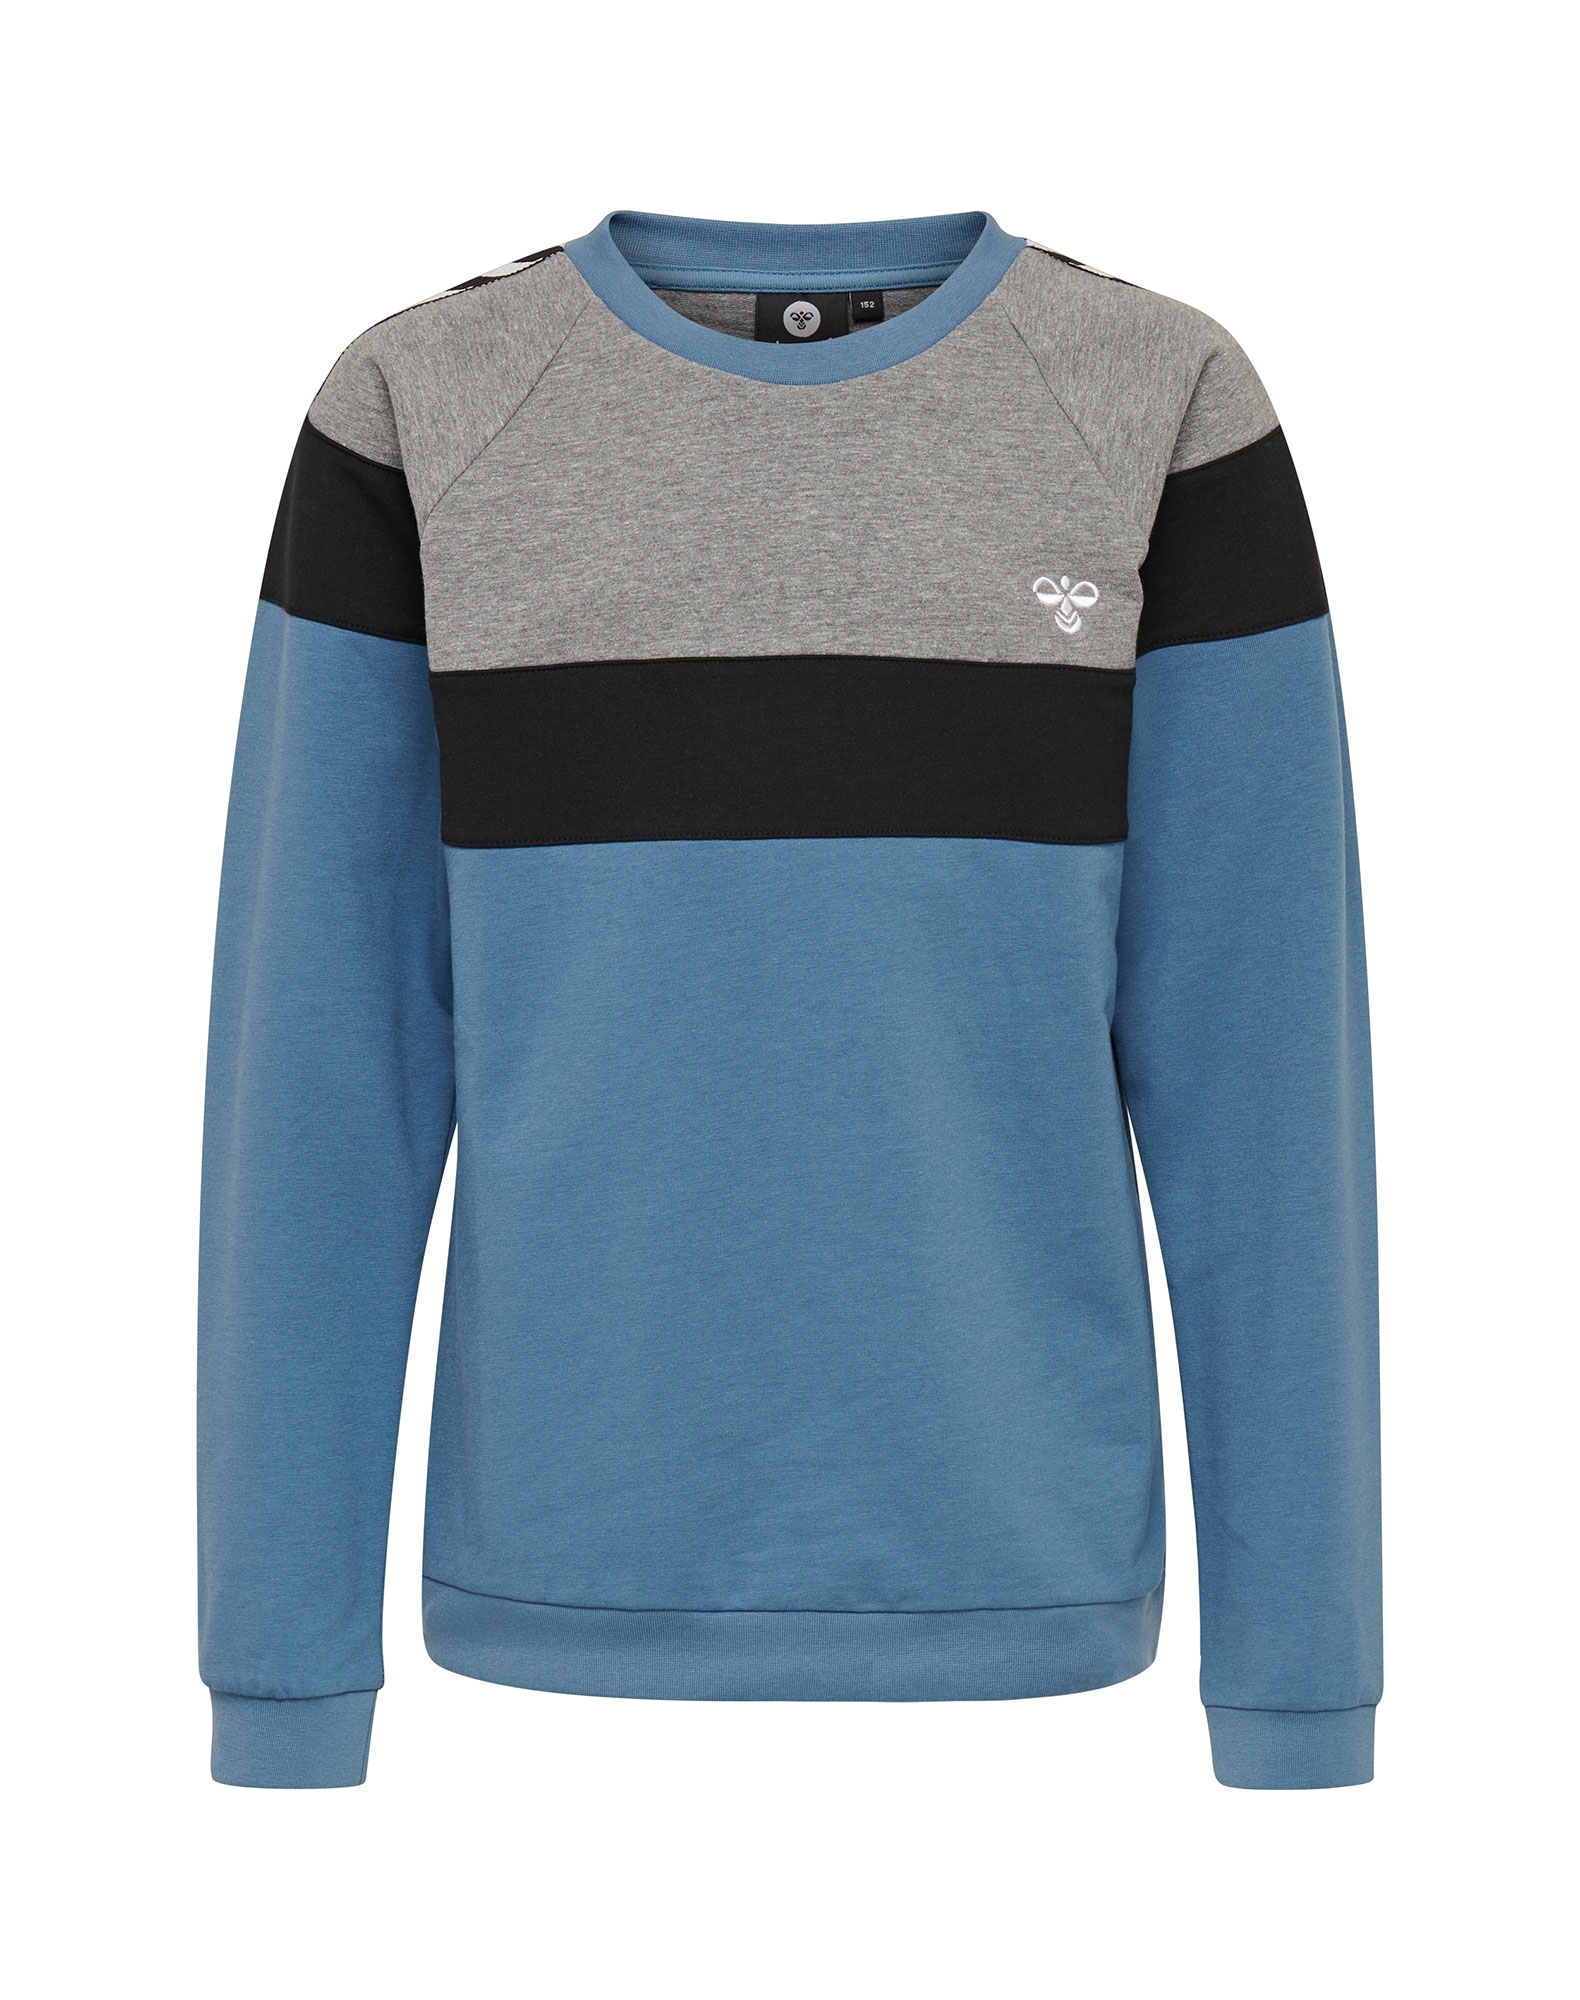 Hummel Hmlbrooklyn Sweatshirt trøjer til i grå/blå